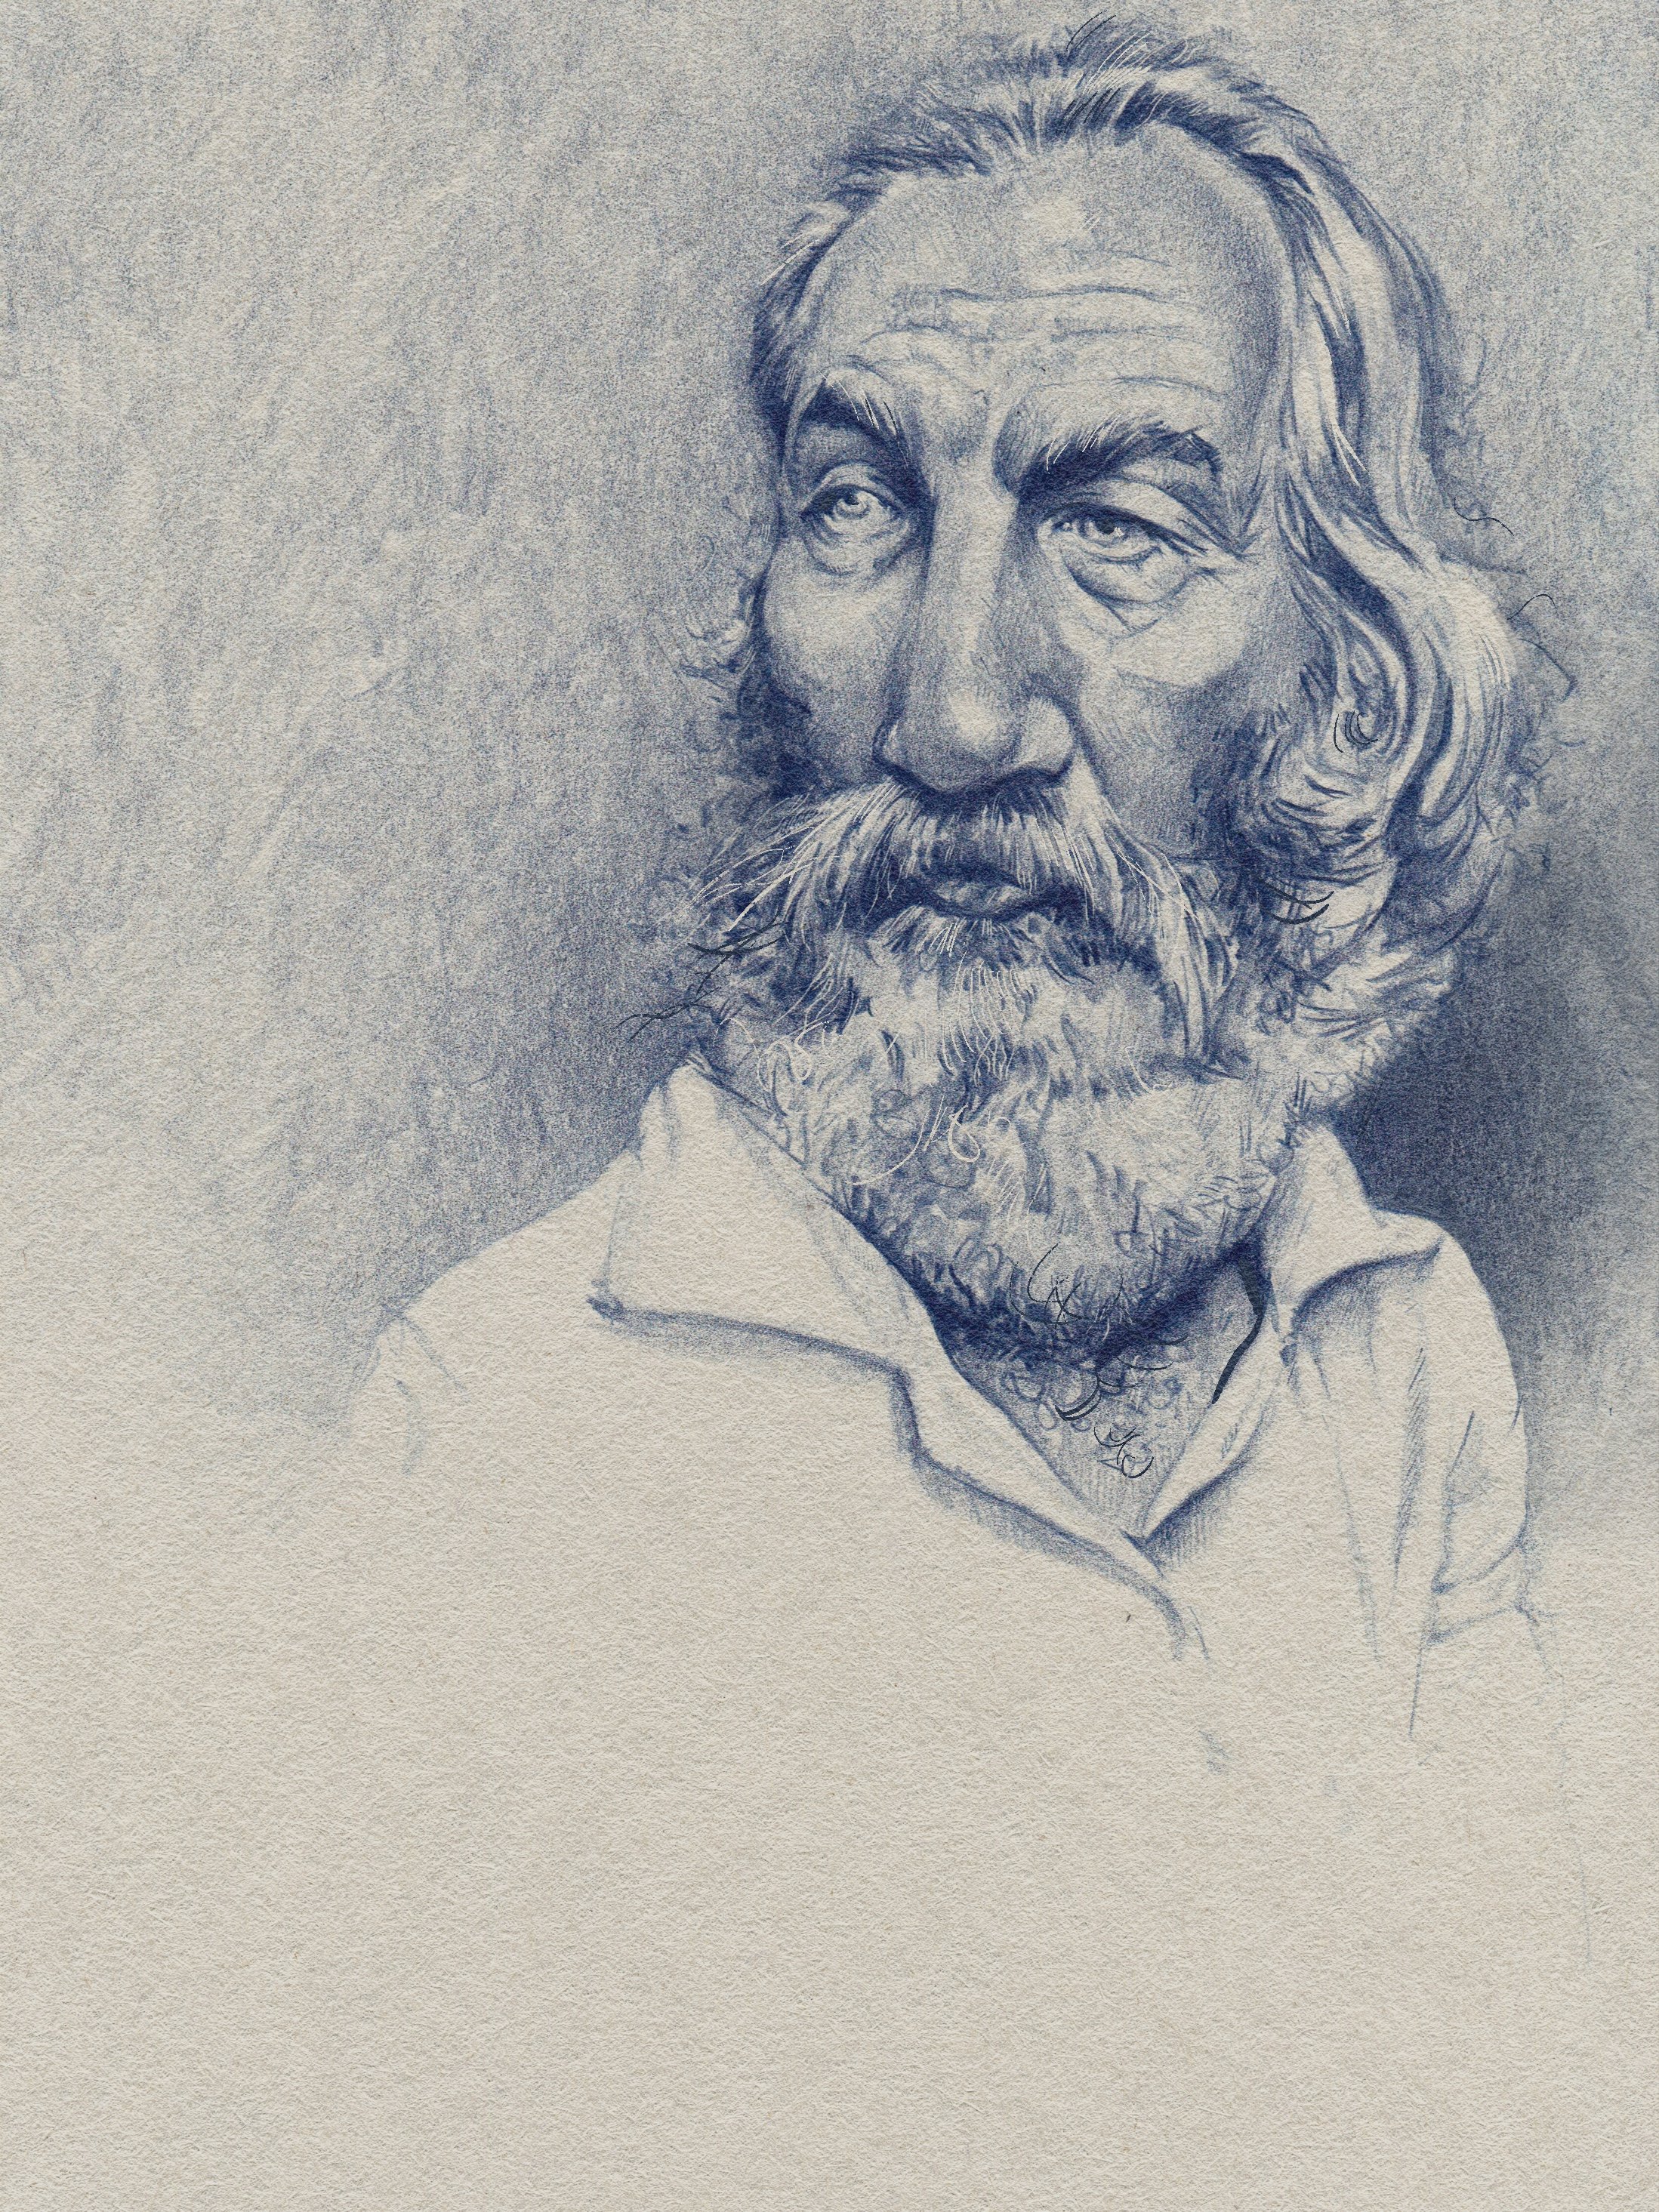 Walt Whitman - May 31, 1819